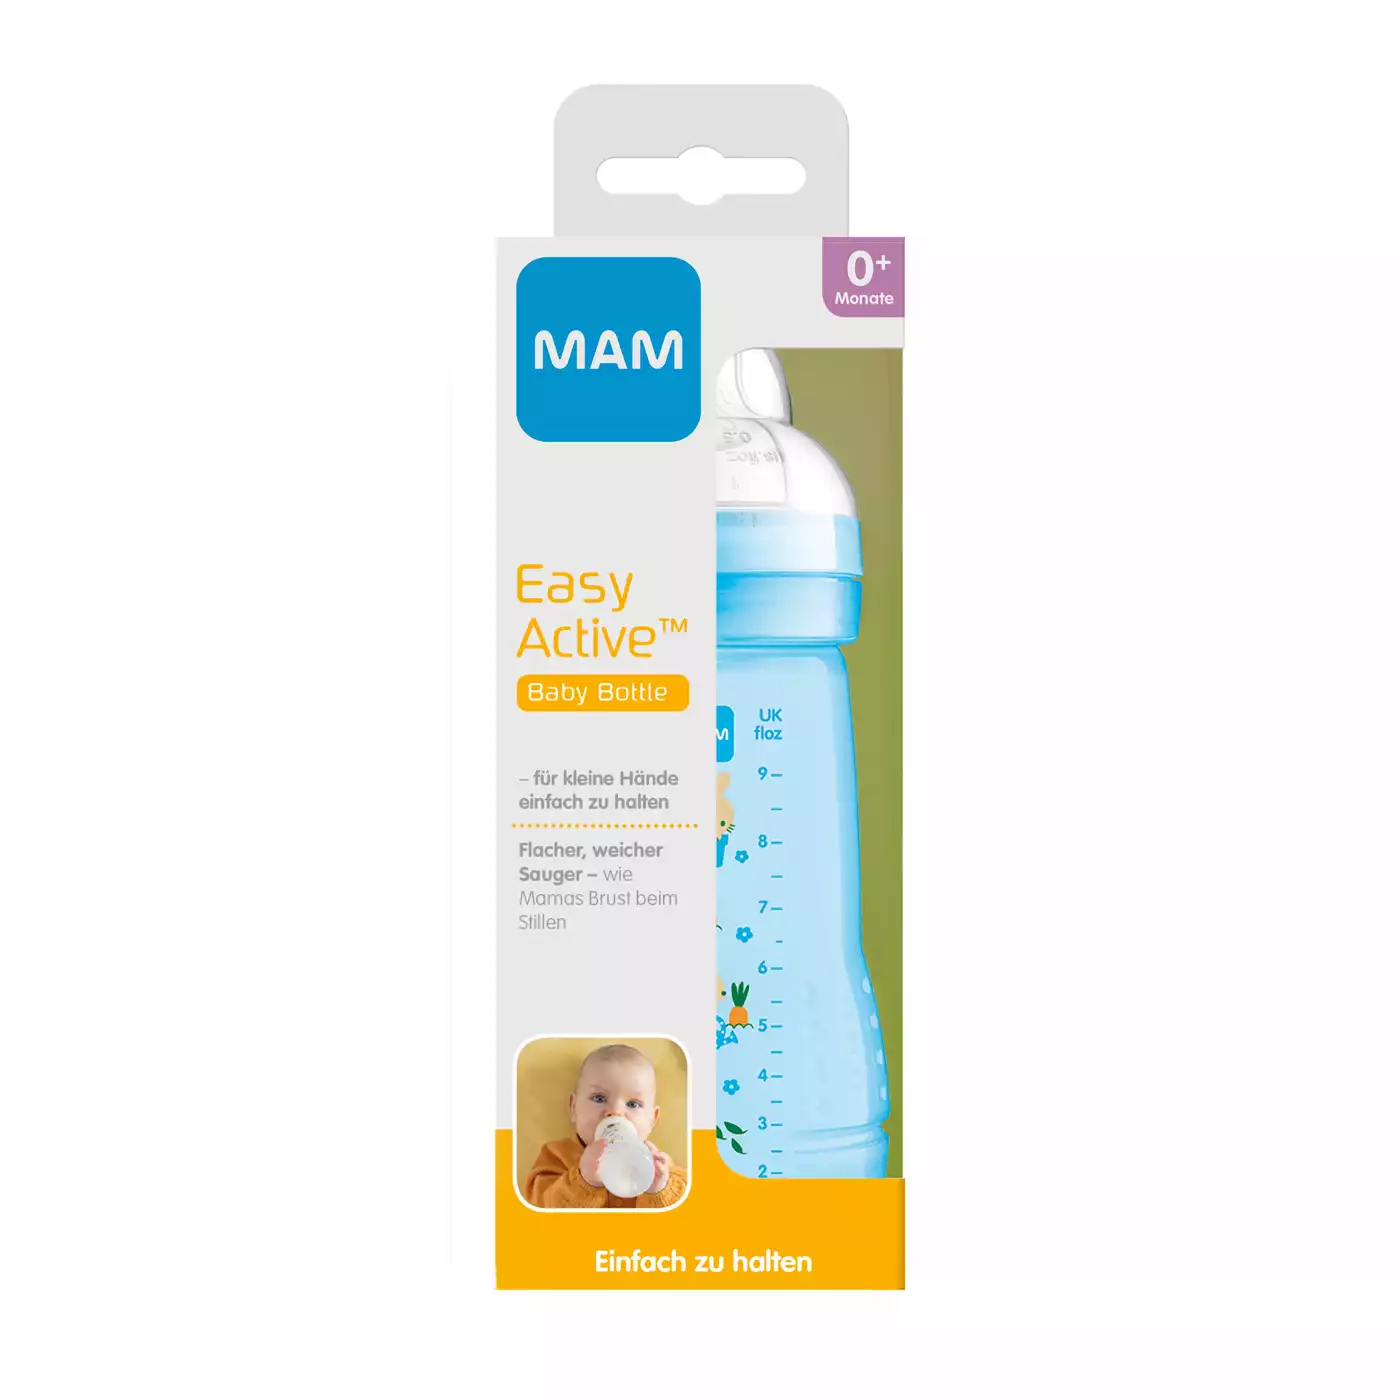 Easy Active Baby Bottle Hase MAM Blau 2000568213018 6